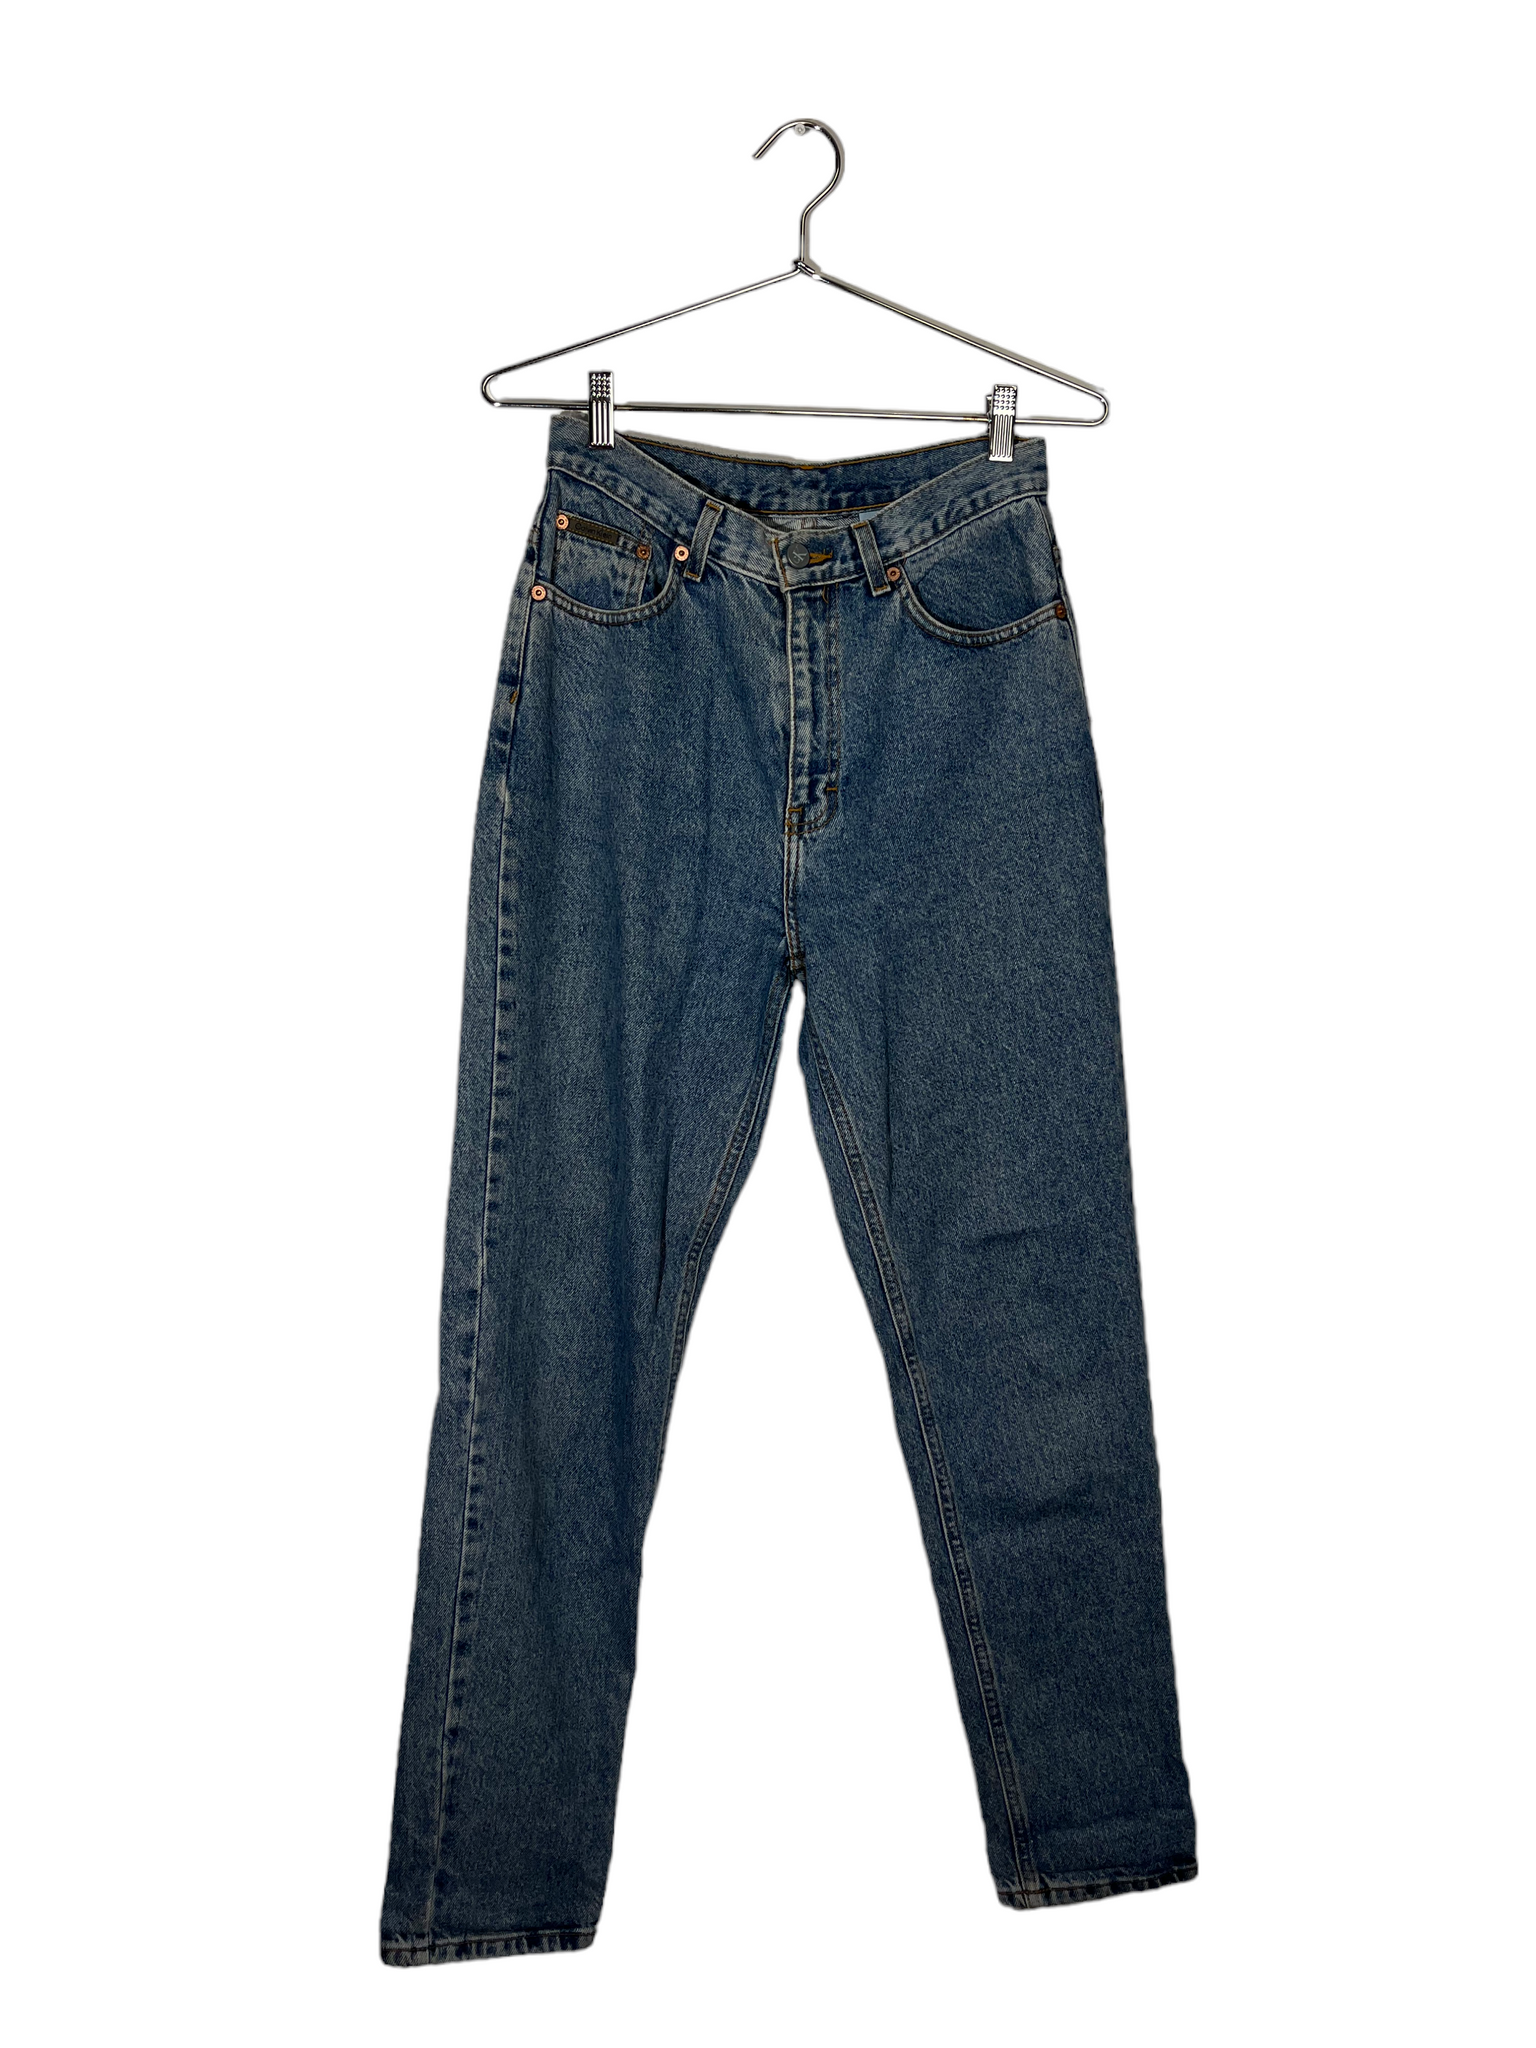 Vintage Calvin Klein High Waisted Jeans